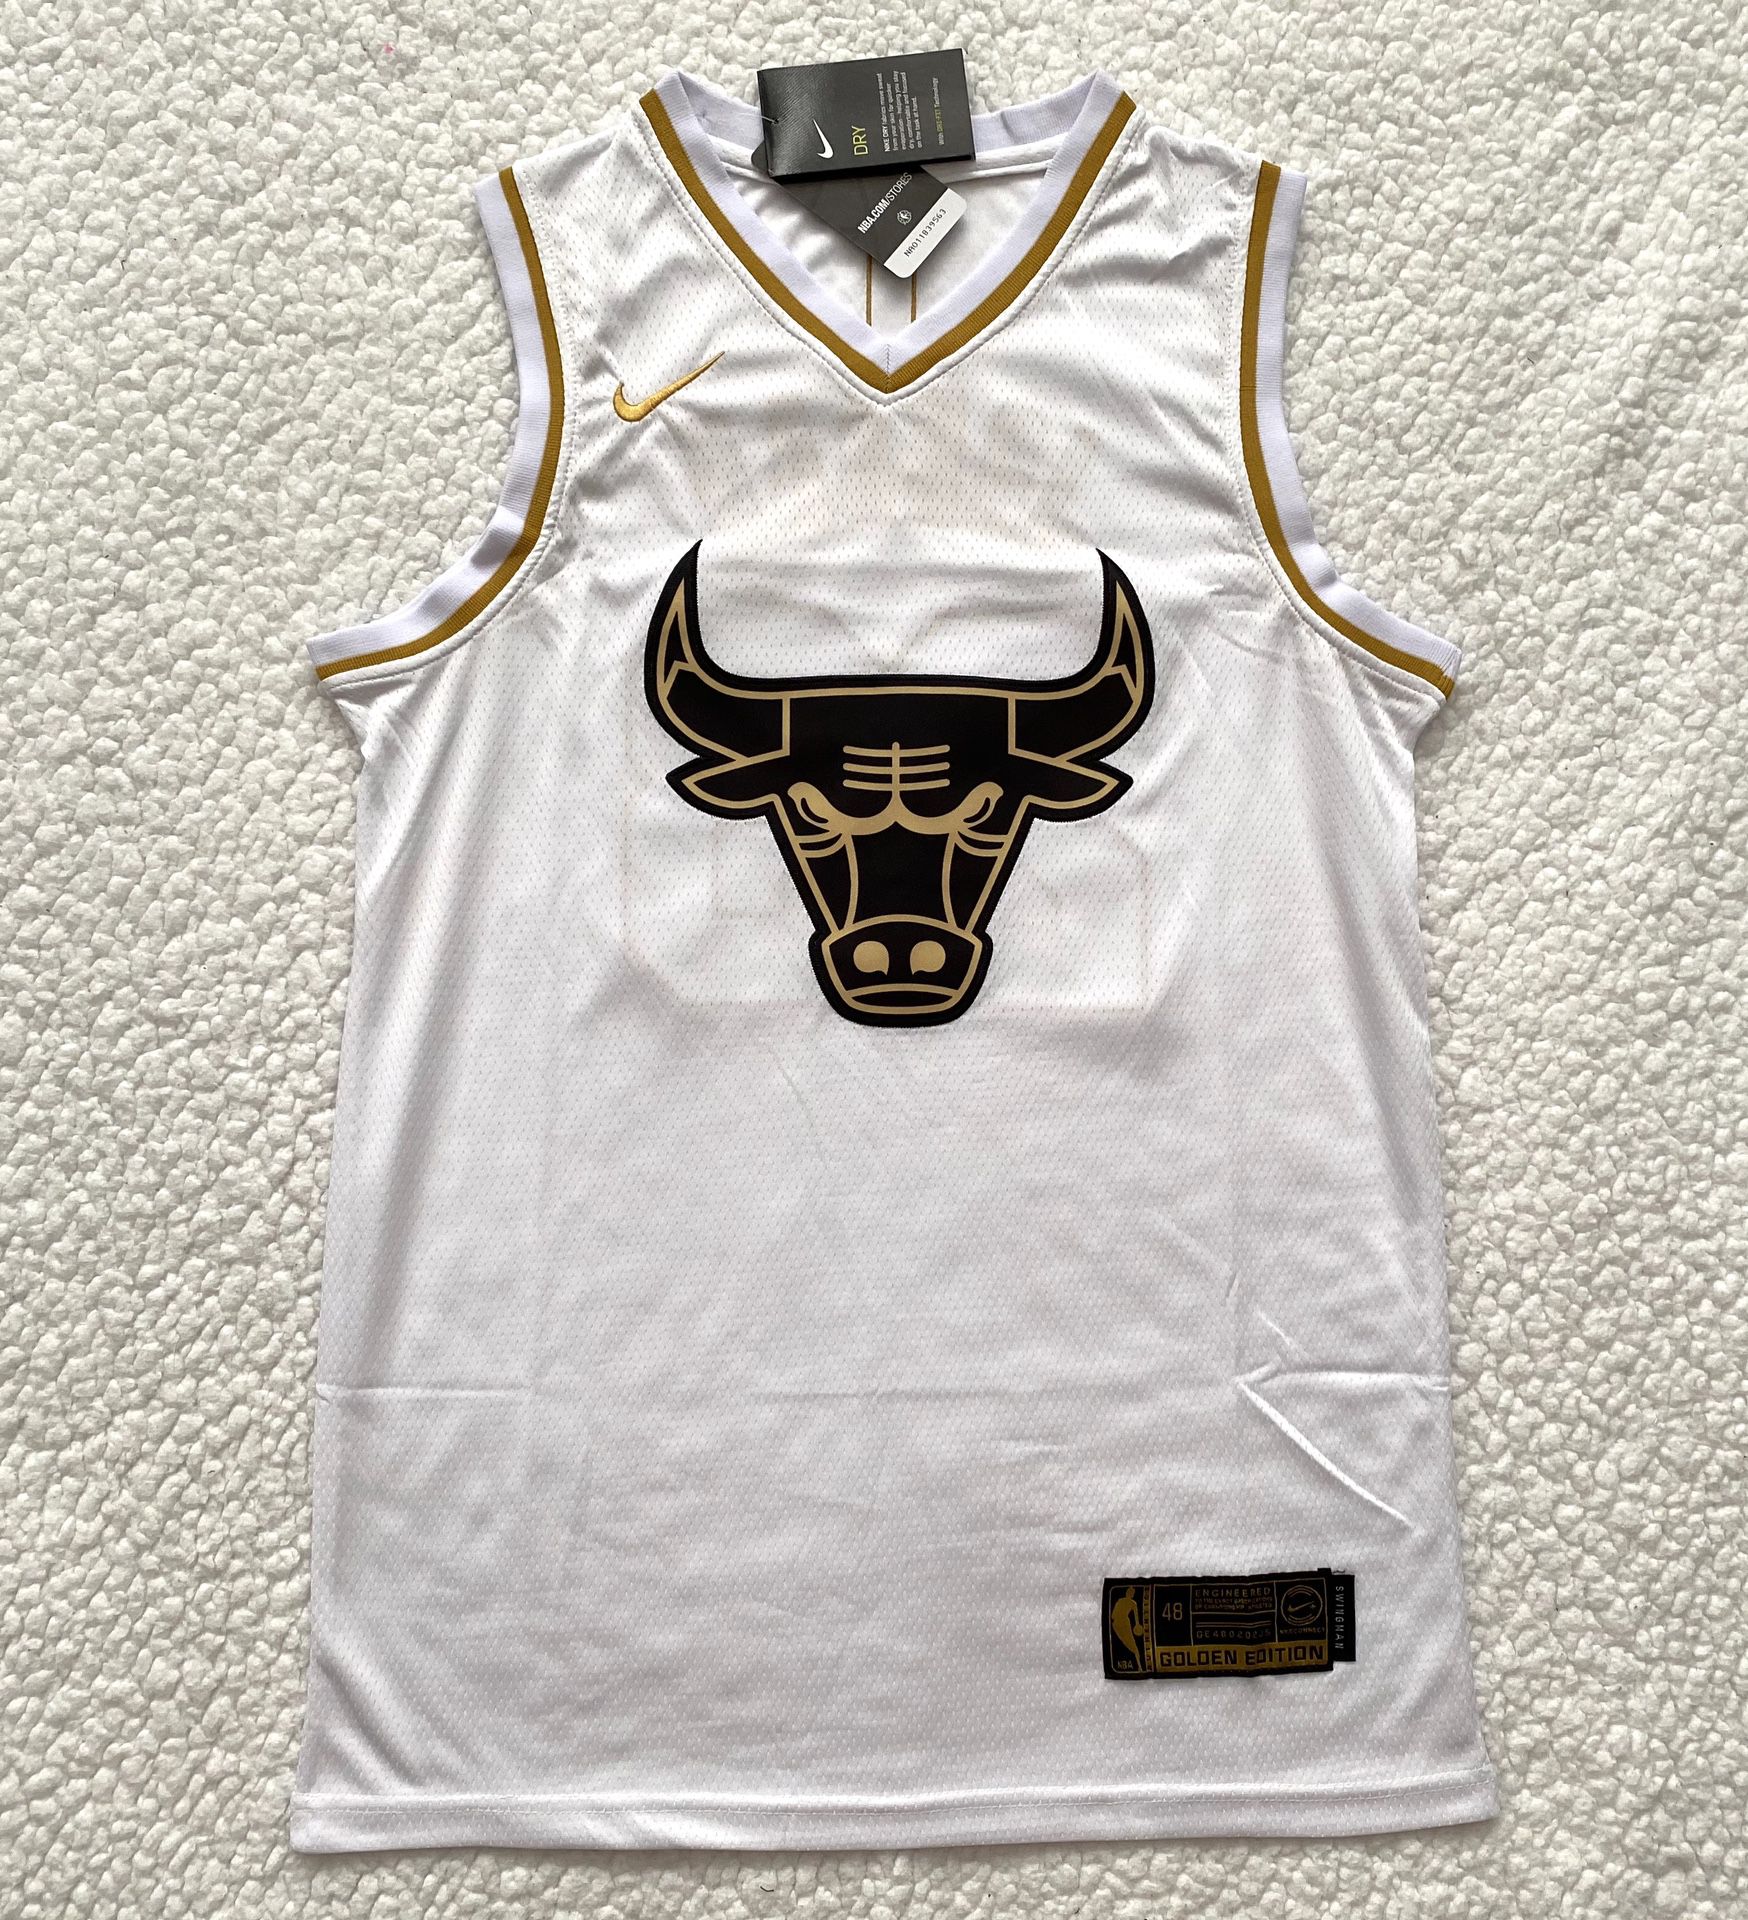 Michael Jordan Chicago Bulls Jersey - Brand New - Men’s - Nike Golden Edition NBA White Jersey - Size S / M / L / XL